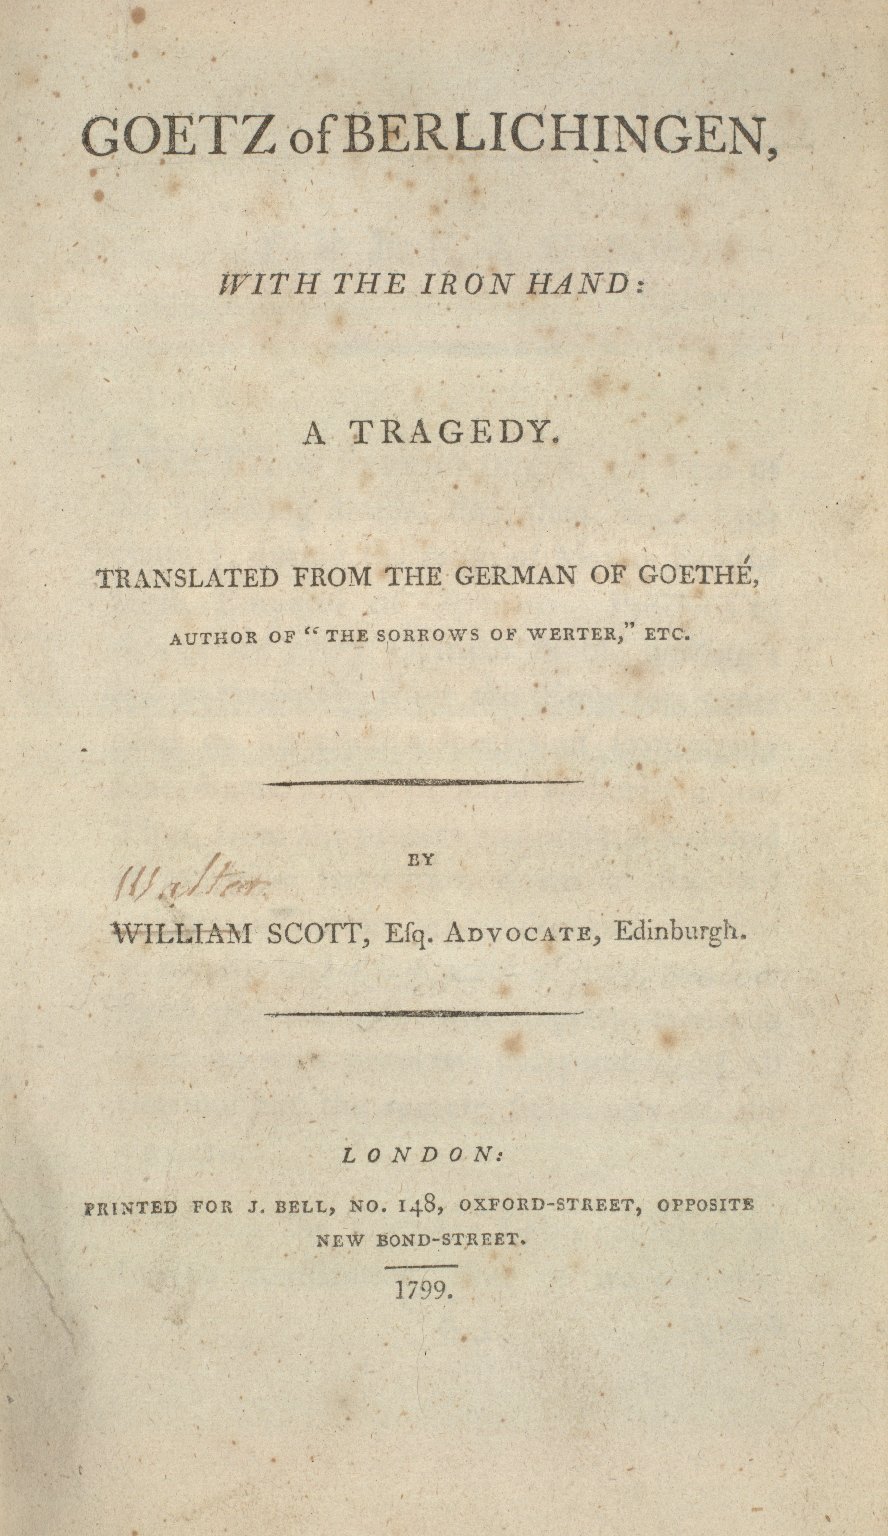 Title page of Walter Scott's translation of Goethe's drama Goetz